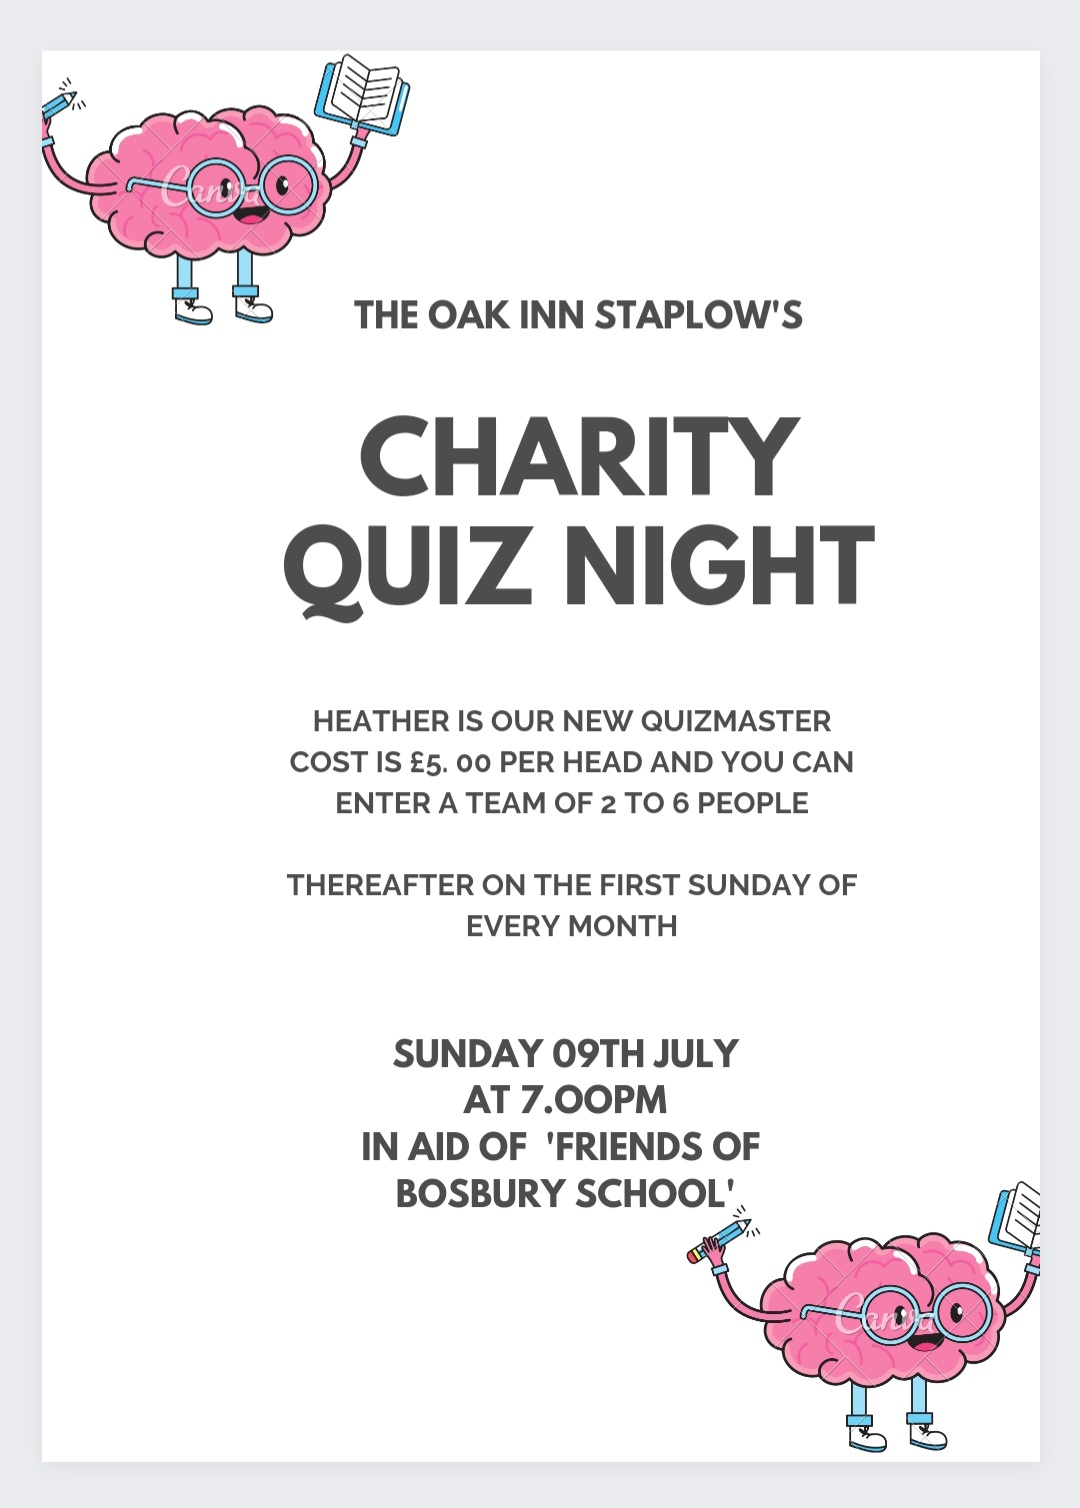 Charity Quiz at The Oak Inn Staplow Ledbury, Herefordshire